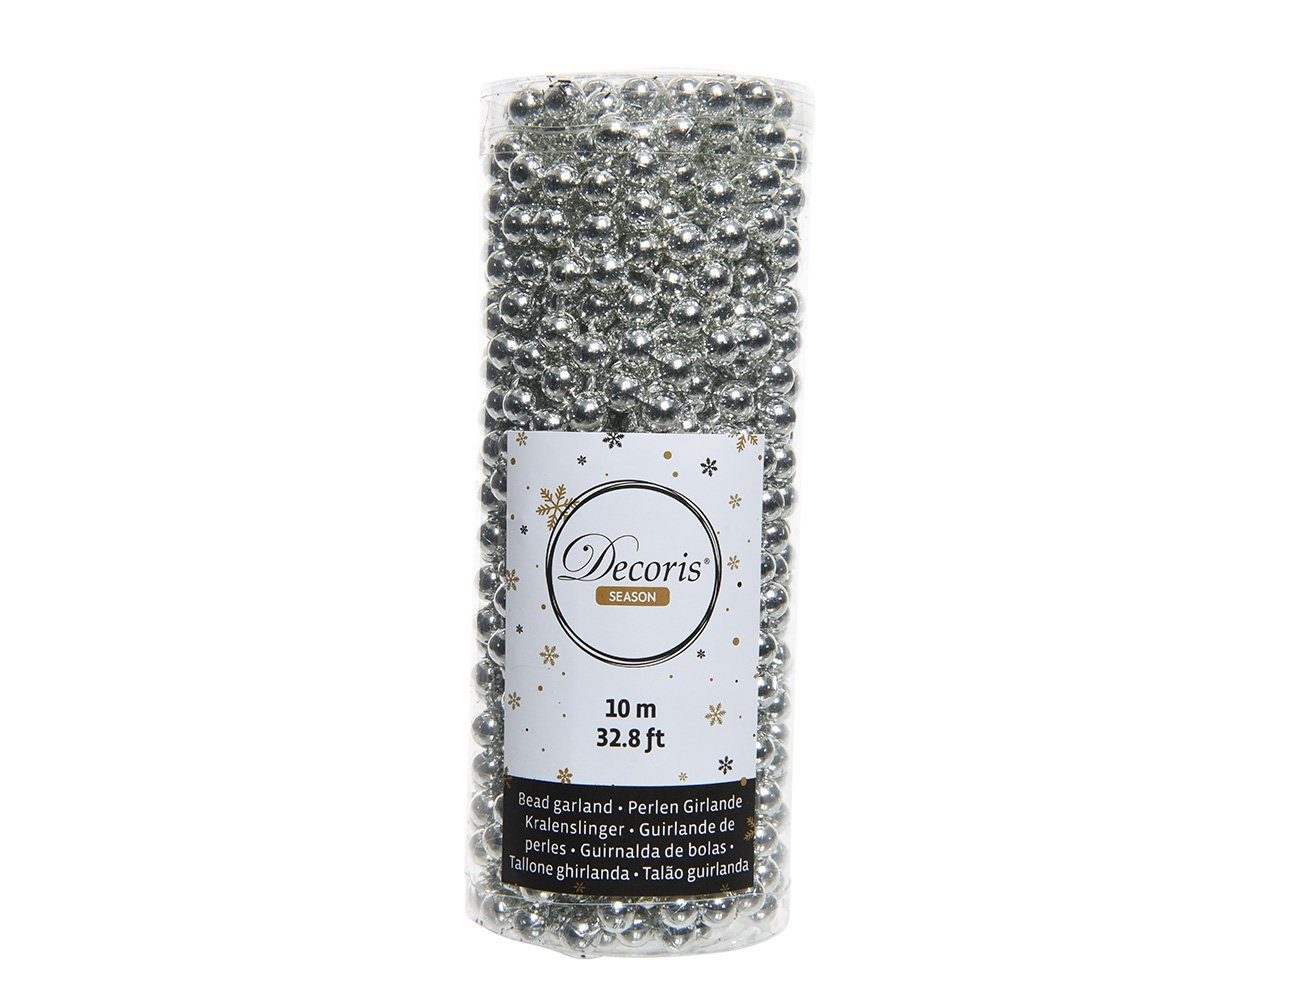 Decoris season decorations Girlanden, Perlenkette 8mm x 10m Kunststoff - Silber | Girlanden